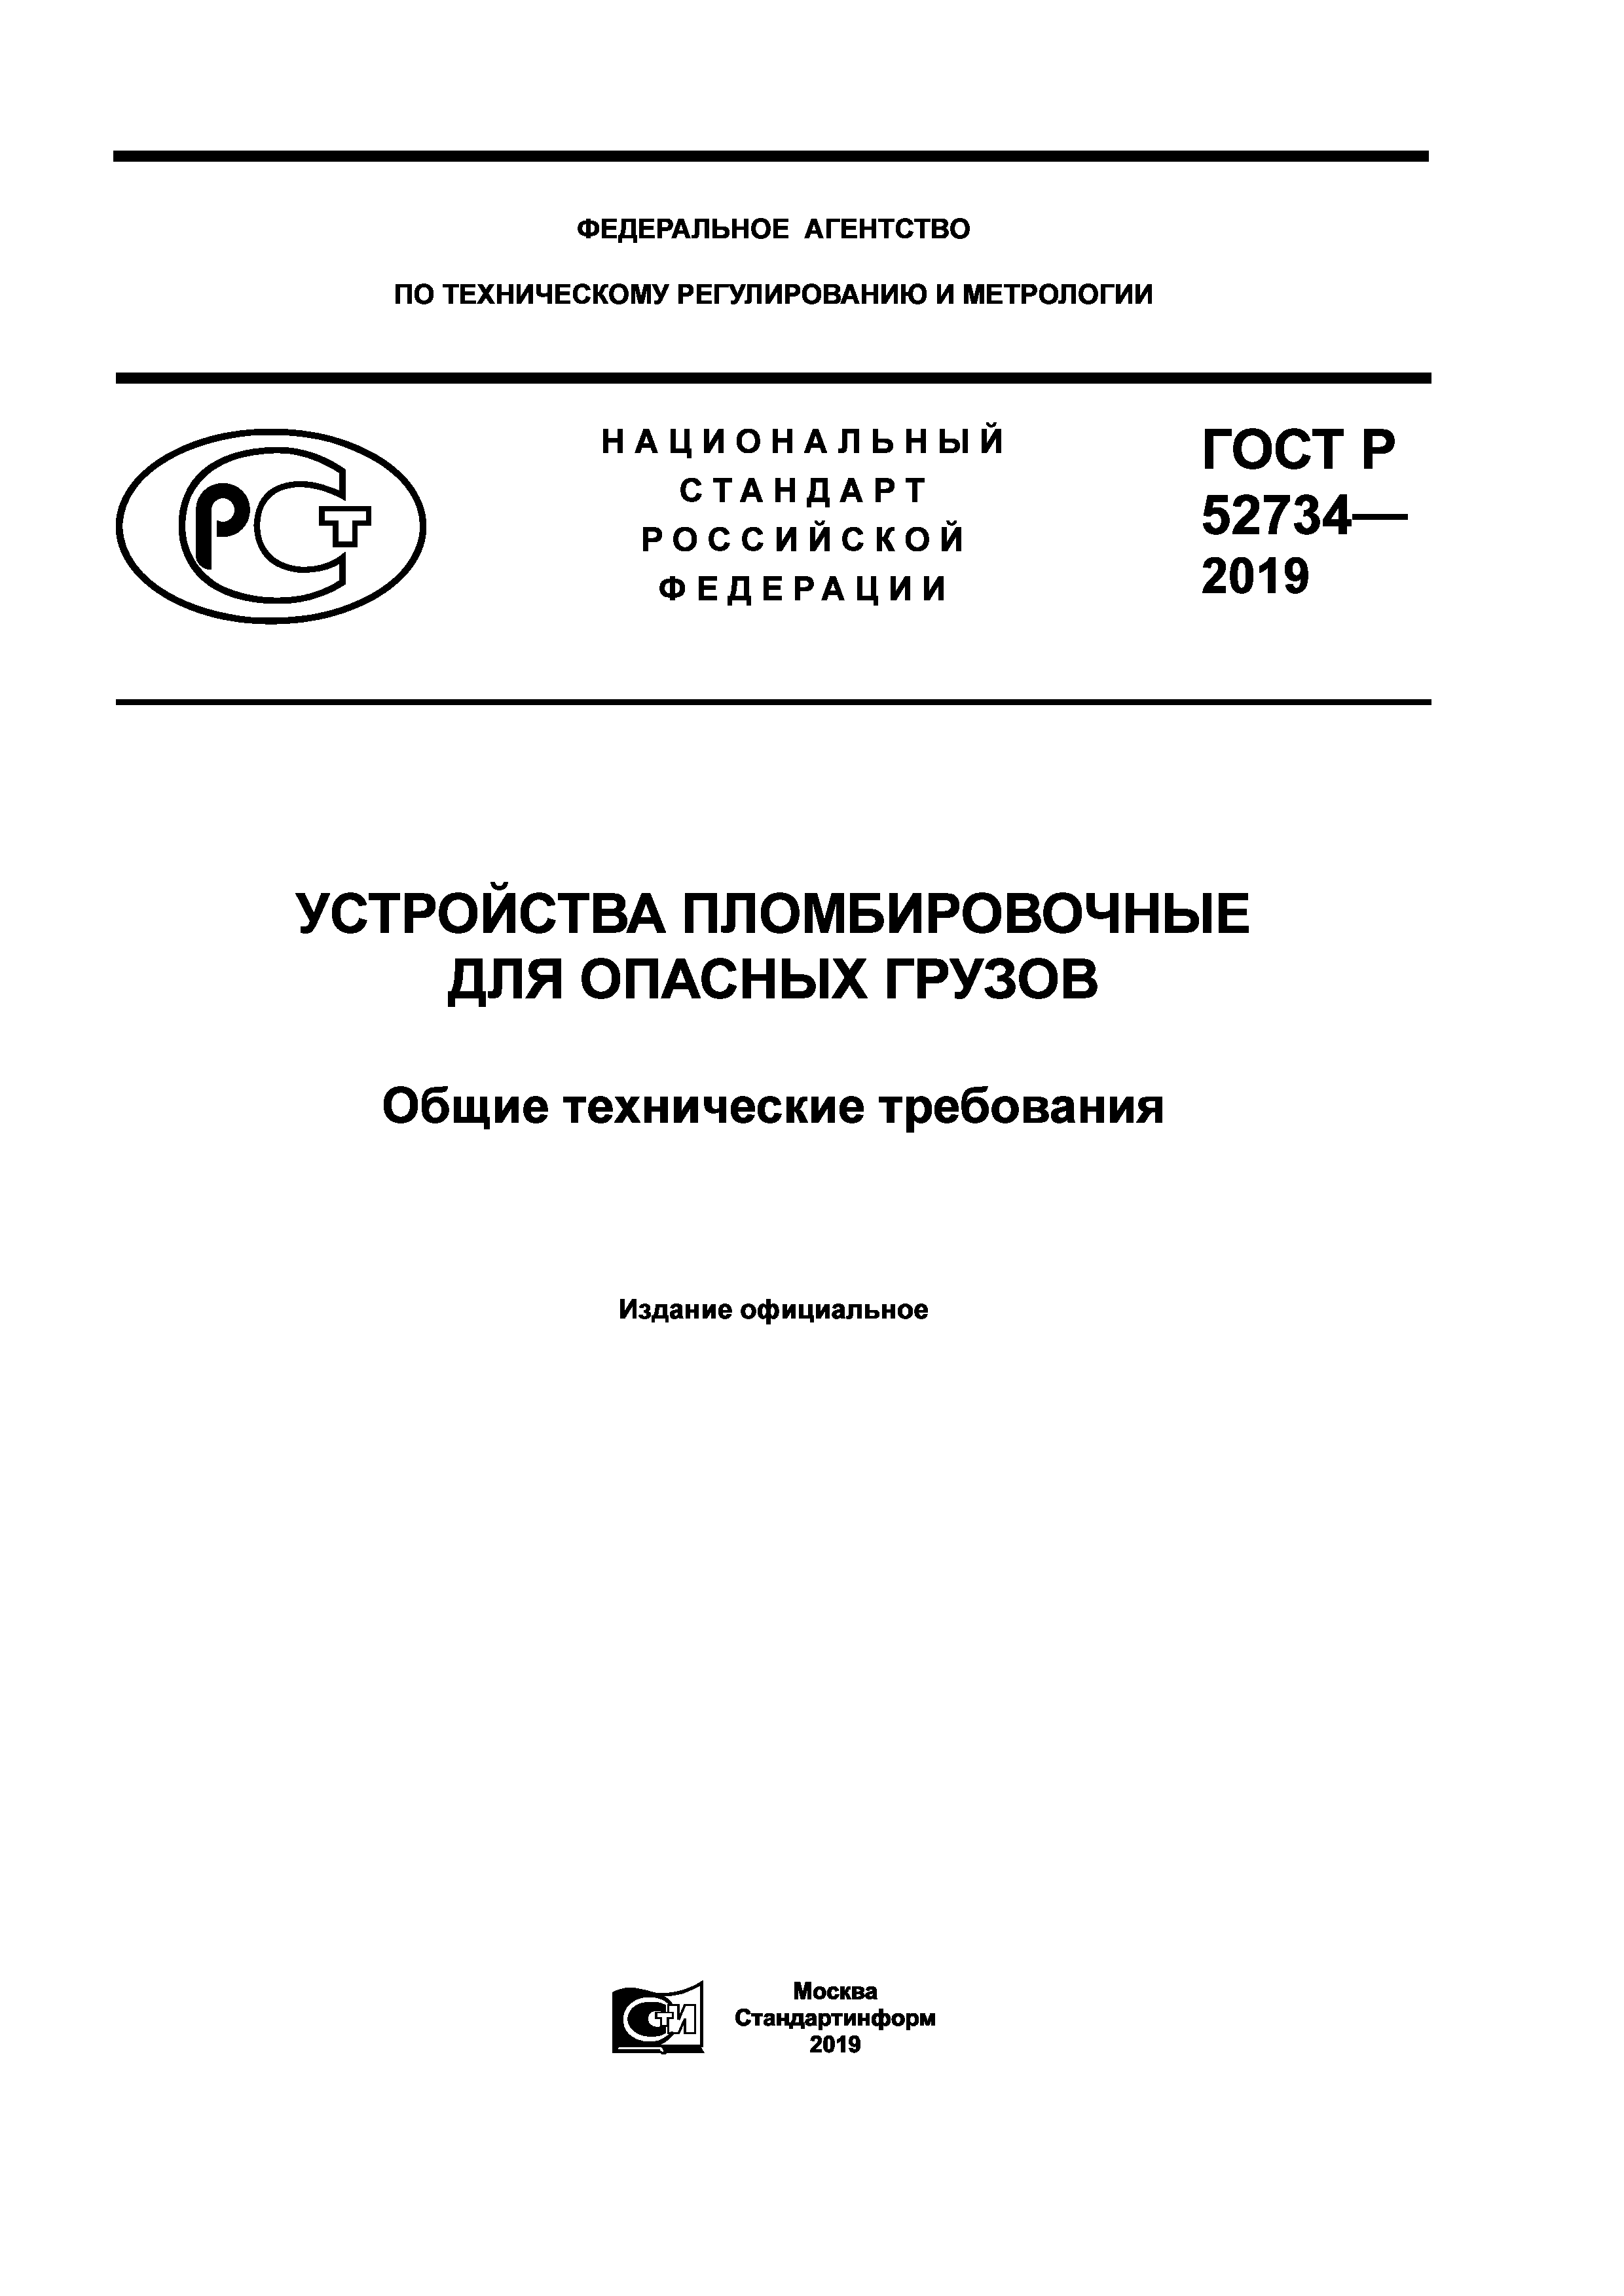 ГОСТ Р 52734-2019